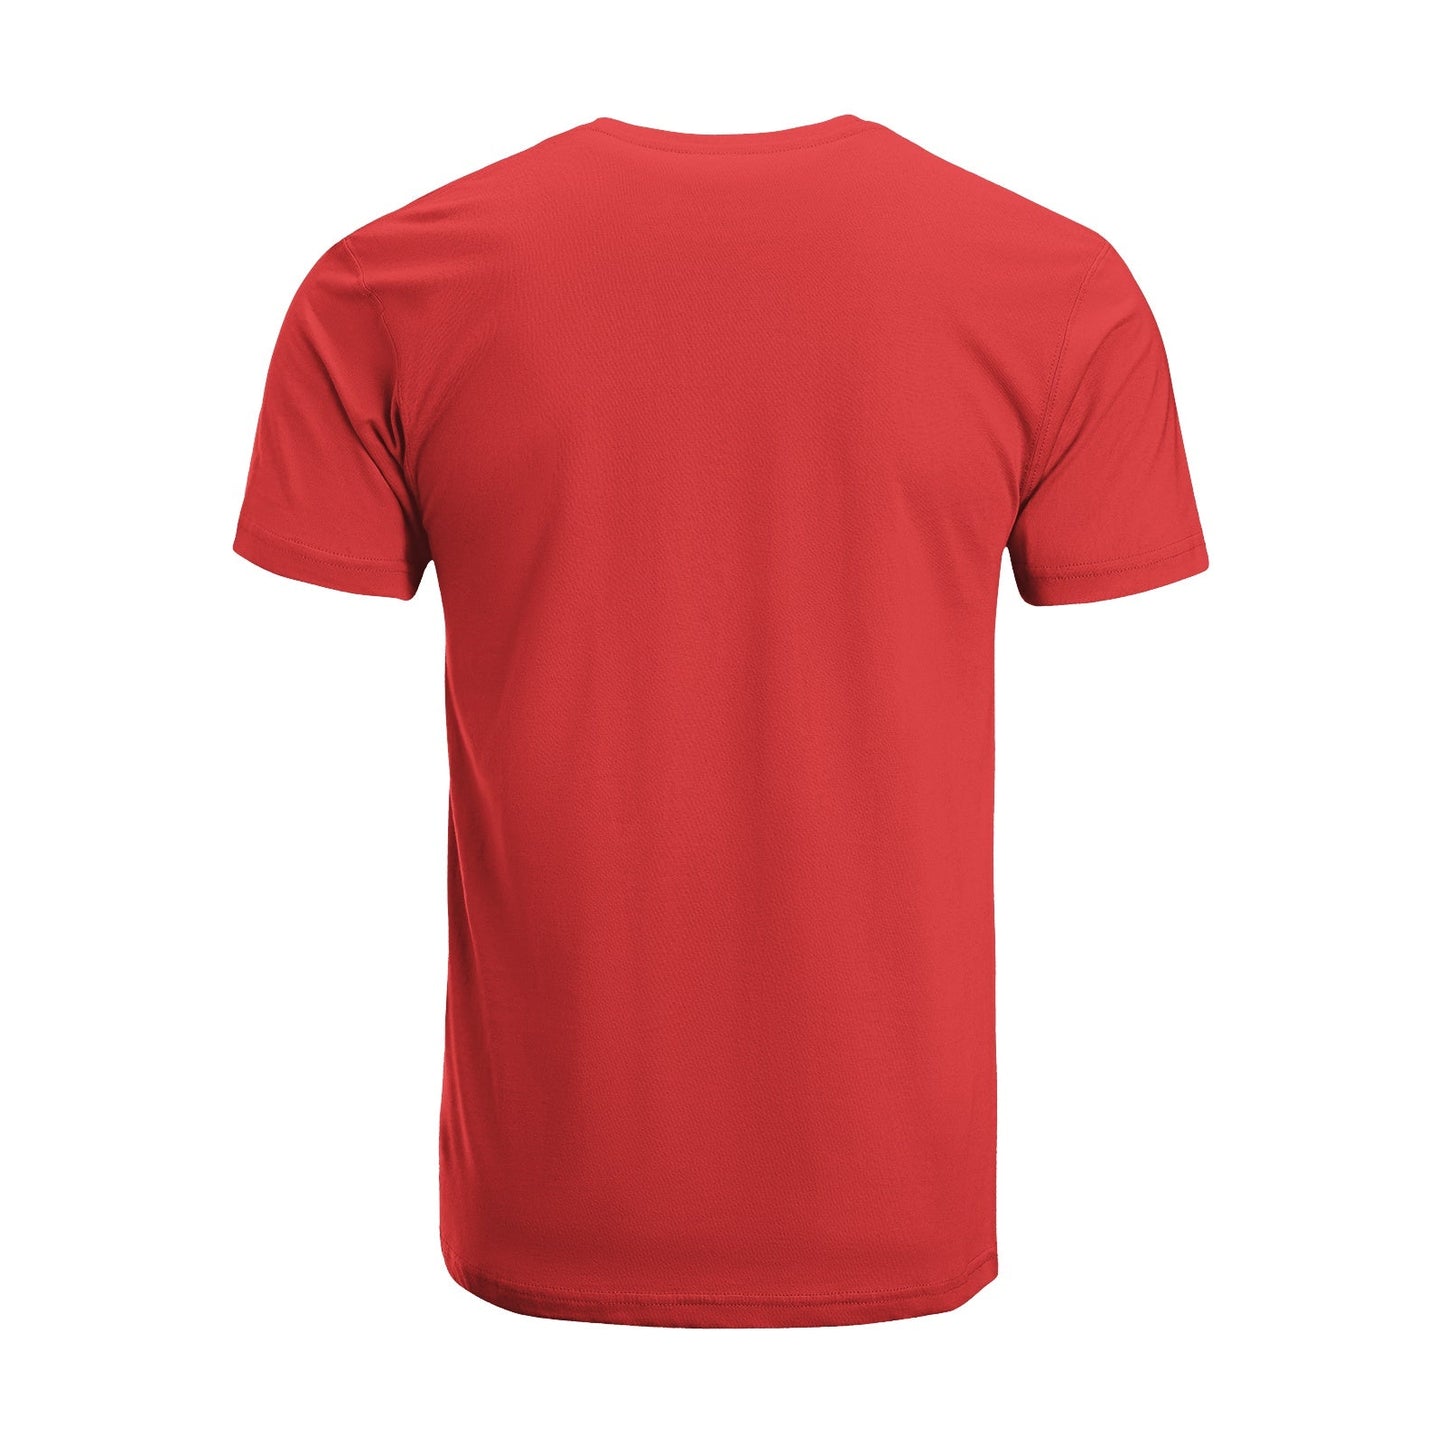 Unisex Short Sleeve Crew Neck Cotton Jersey T-Shirt VEGAN 05